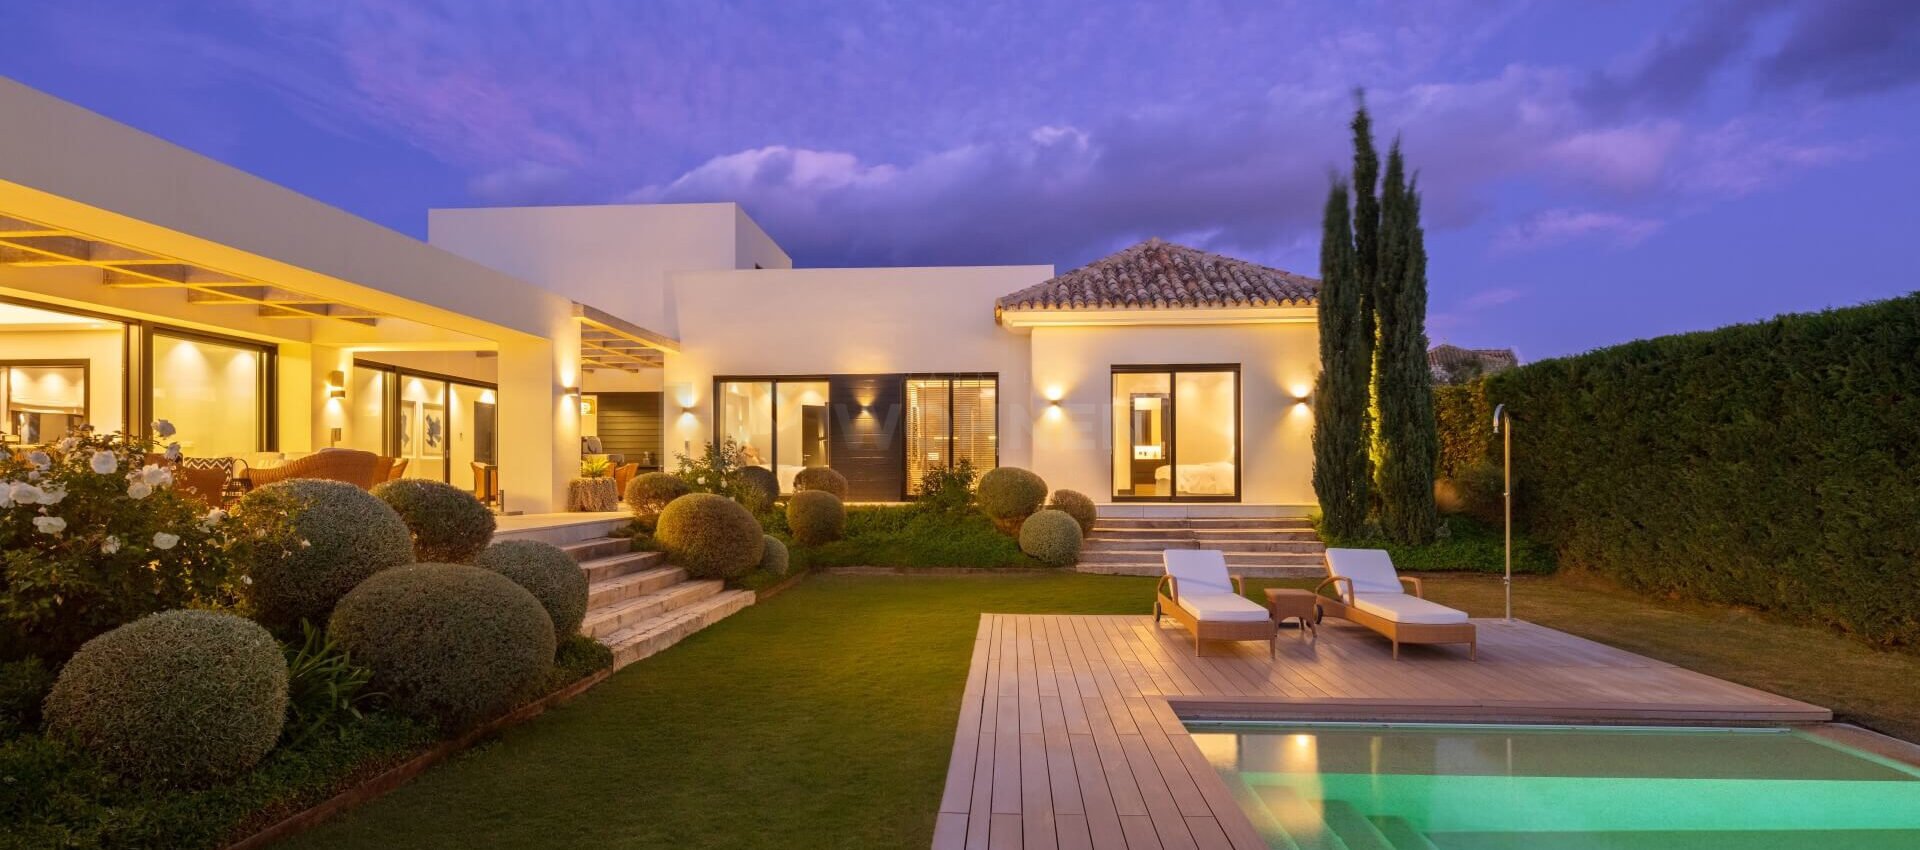 Mediterranean style villa with breathtaking sea views